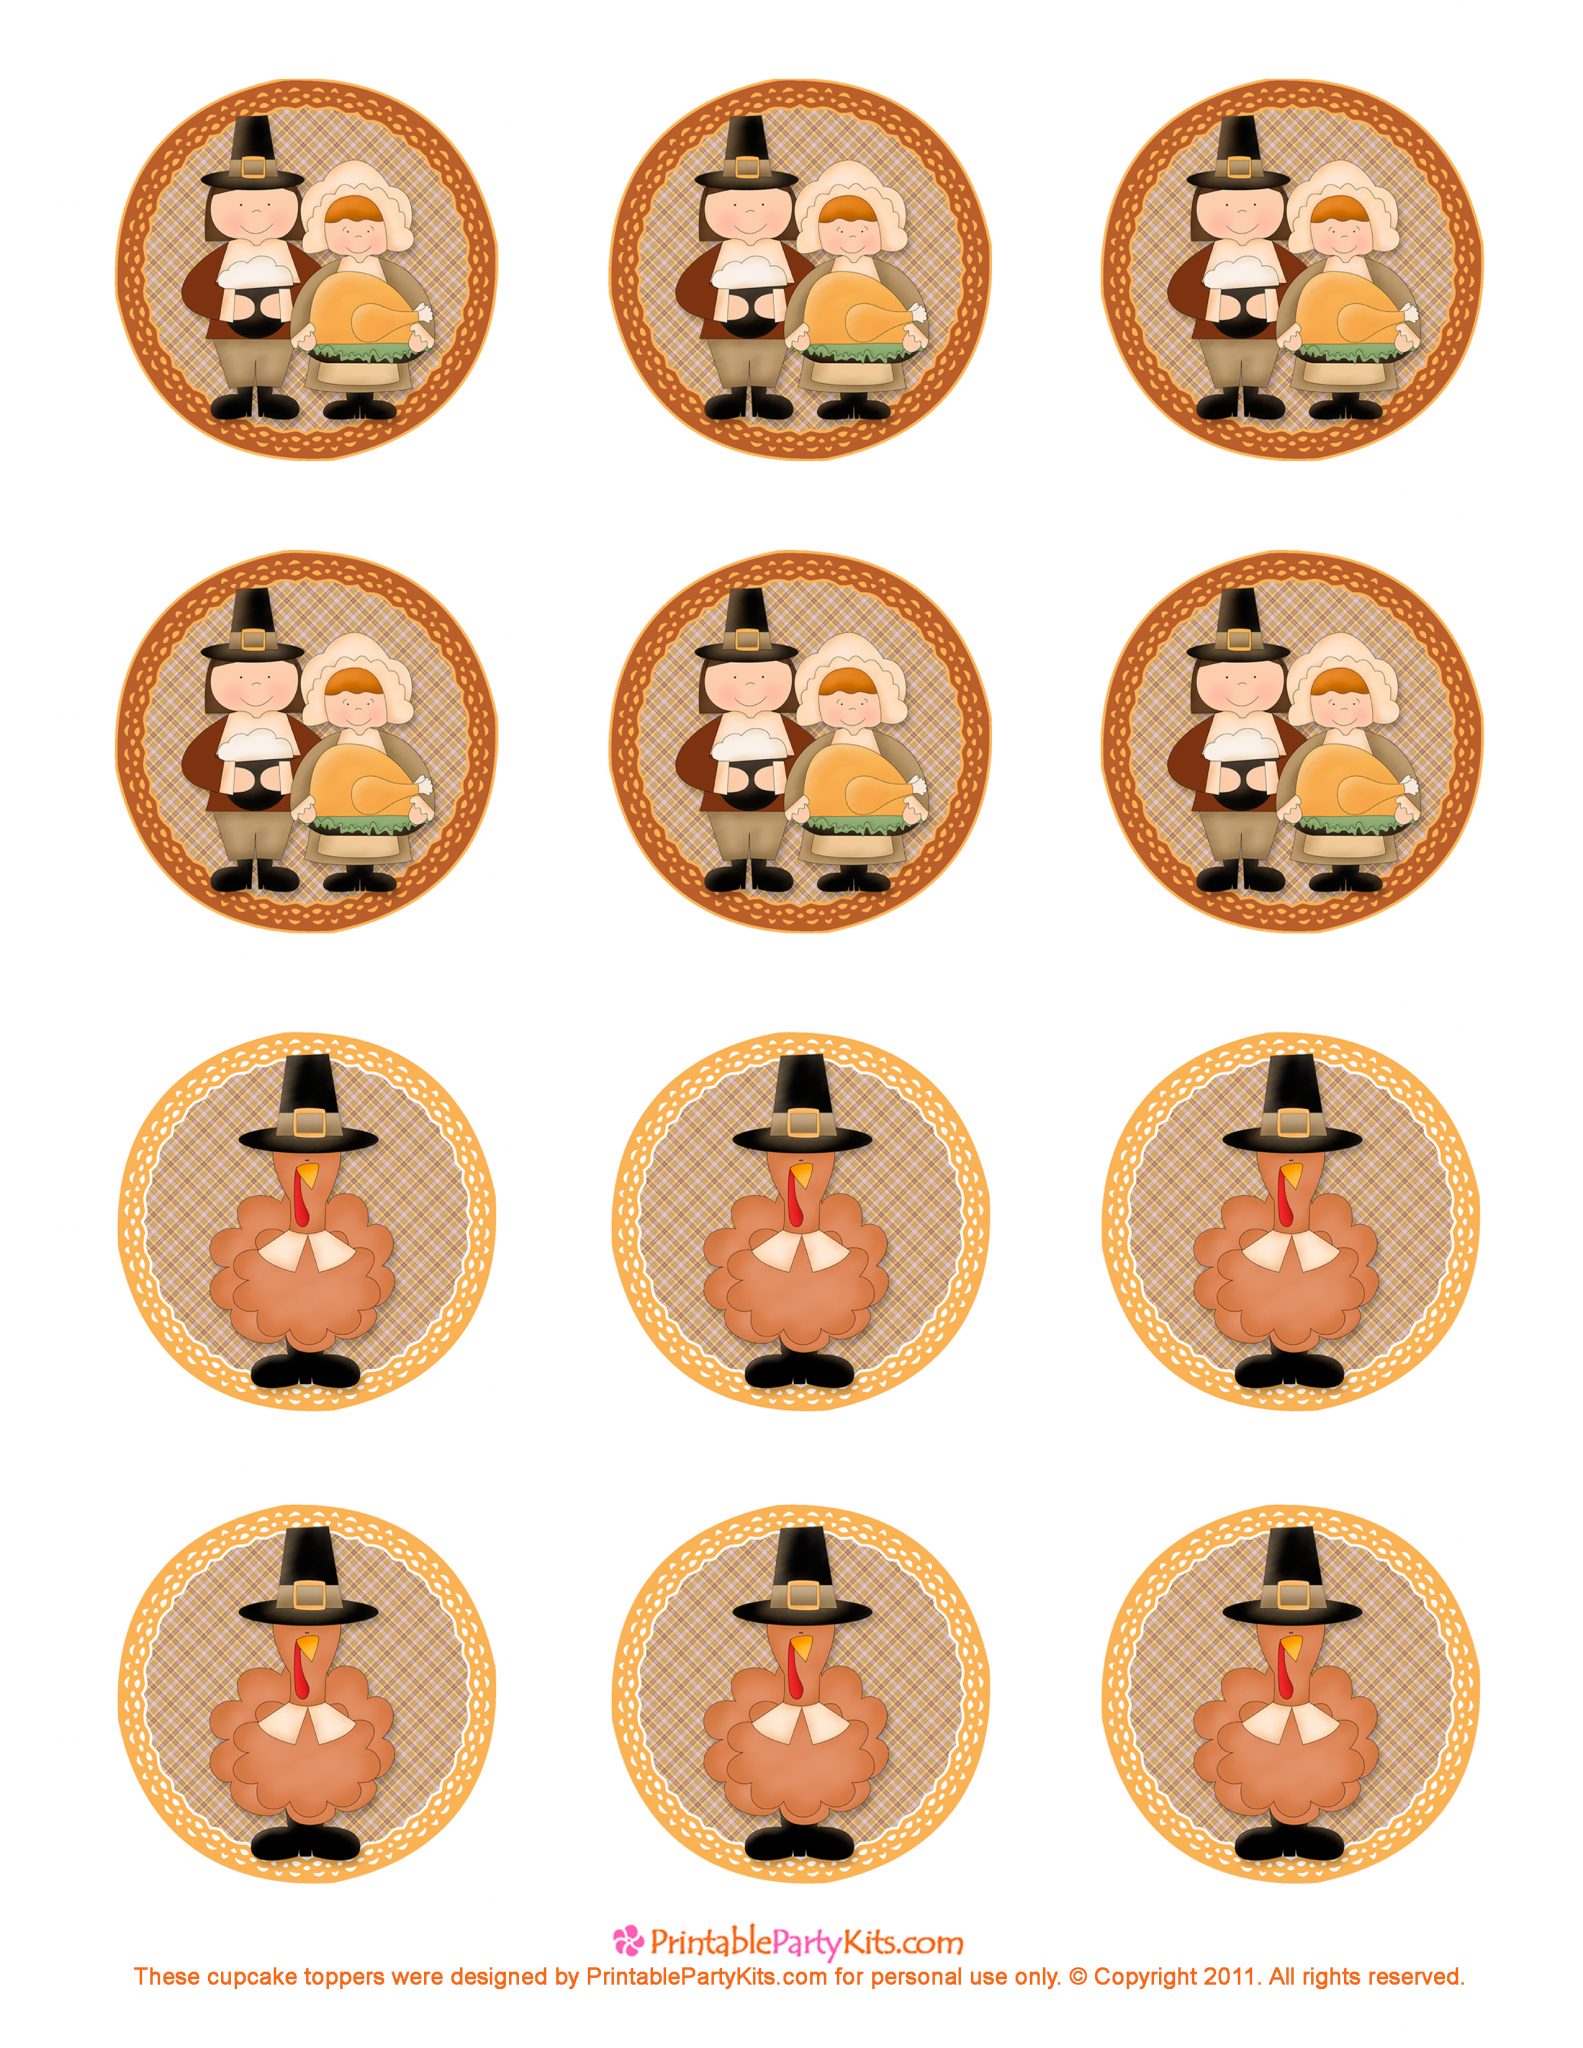 http://printablepartykits.com/thanksgiving-cupcakes/